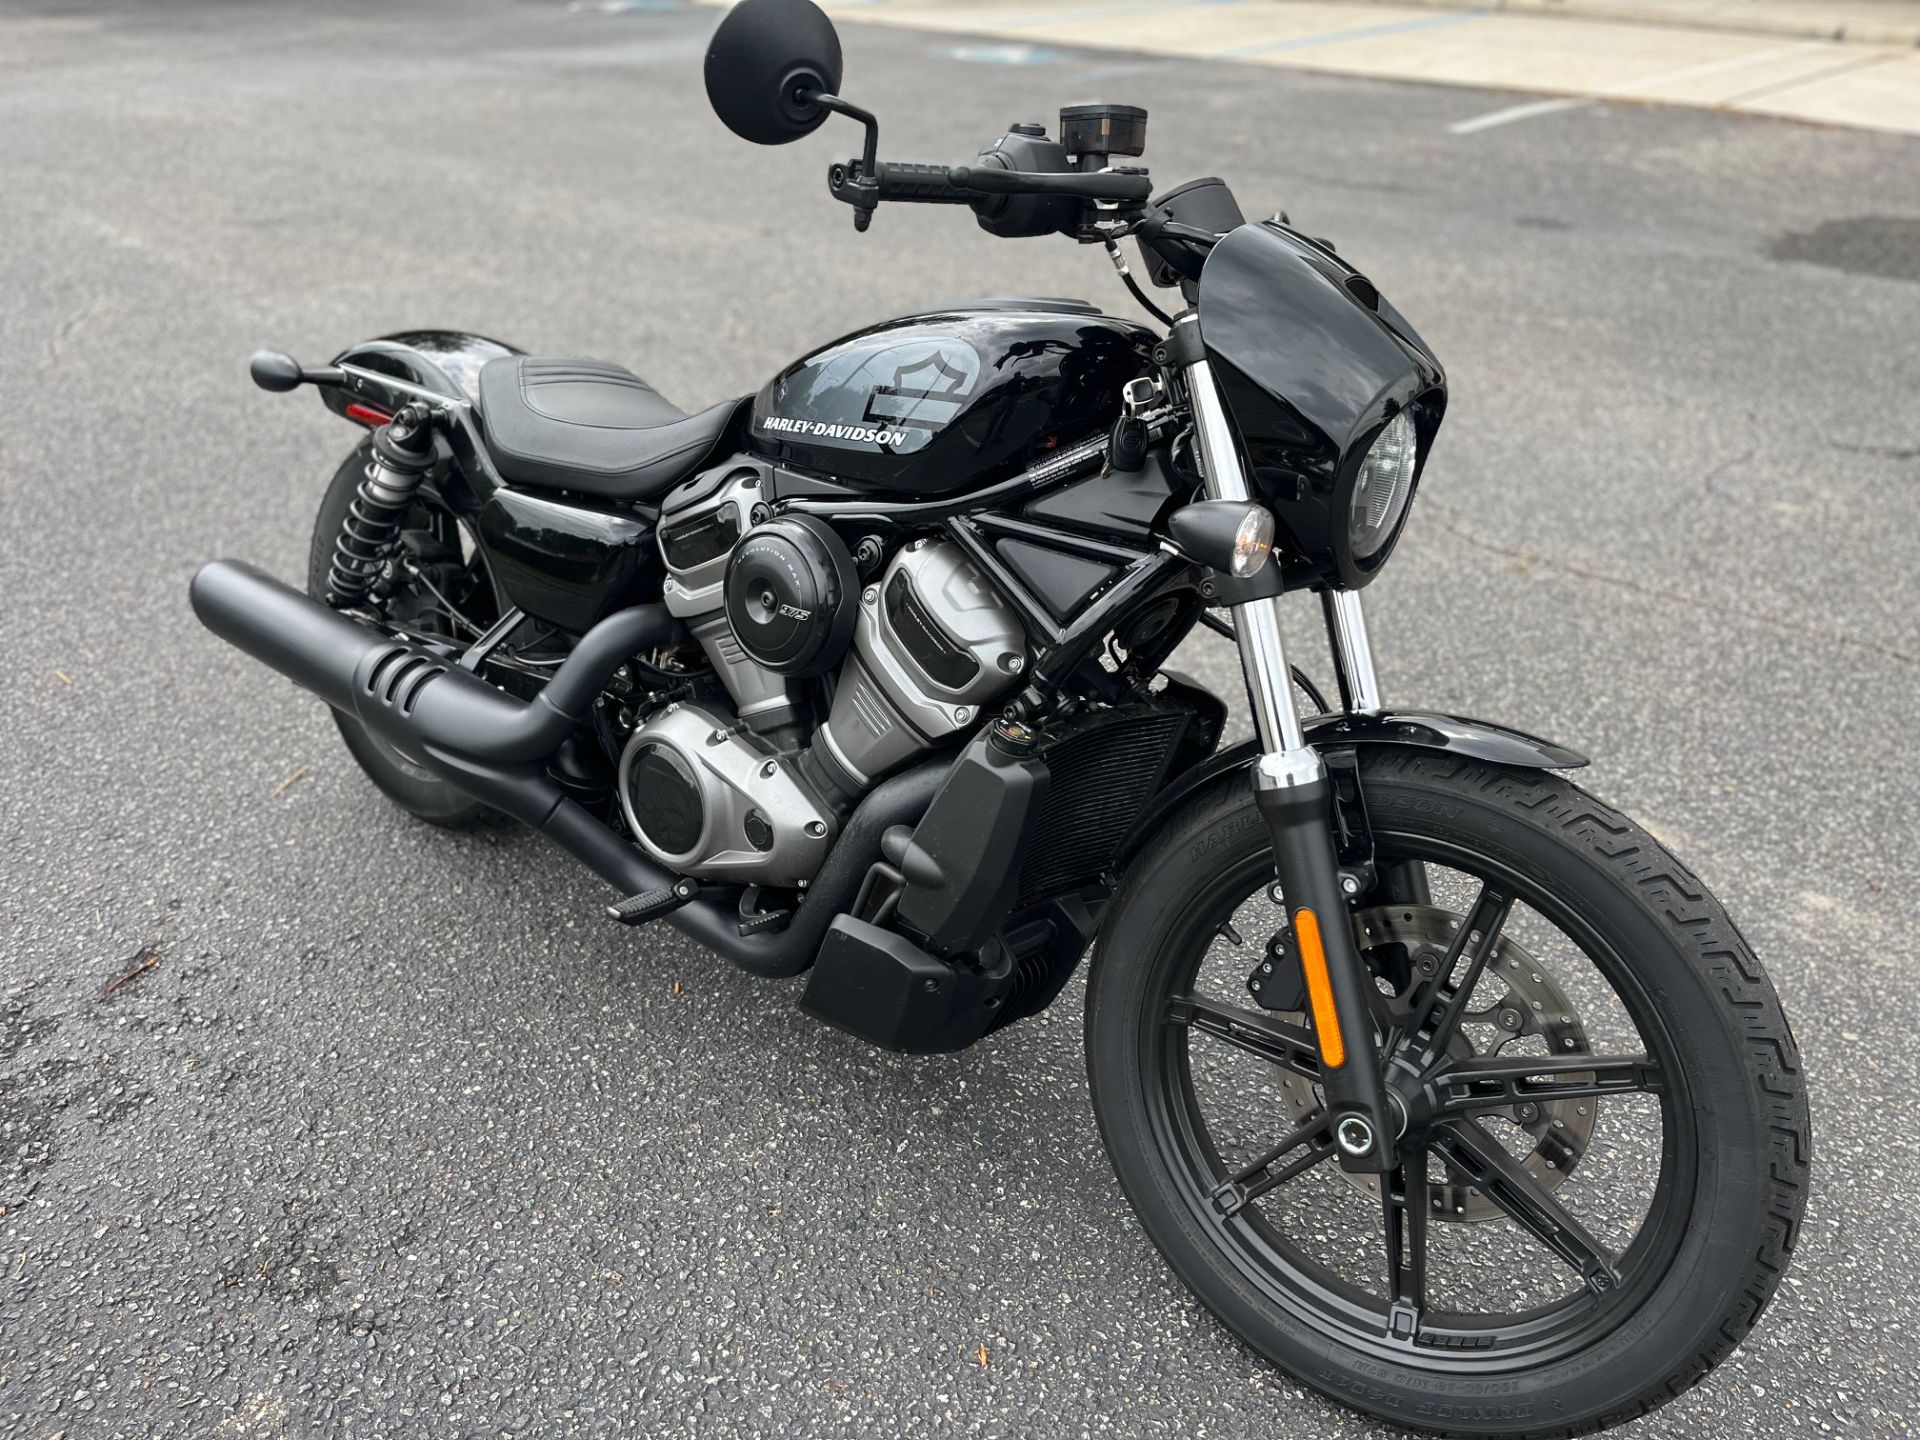 2022 Harley-Davidson Nightster™ in Virginia Beach, Virginia - Photo 2